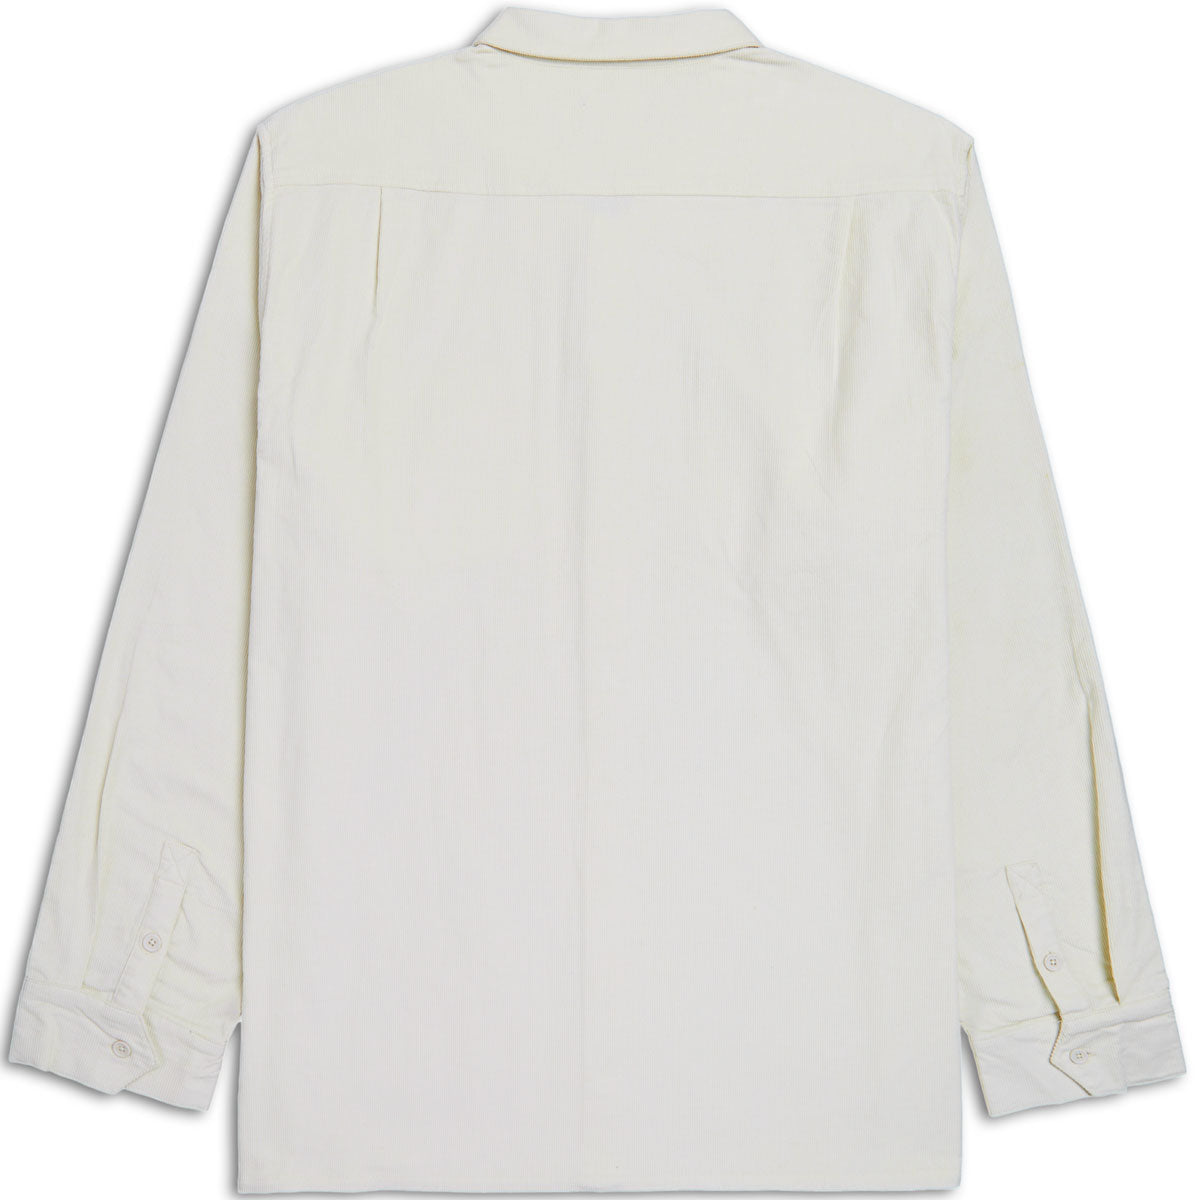 CCS Long Sleeve Corduroy Shirt - Off White image 3